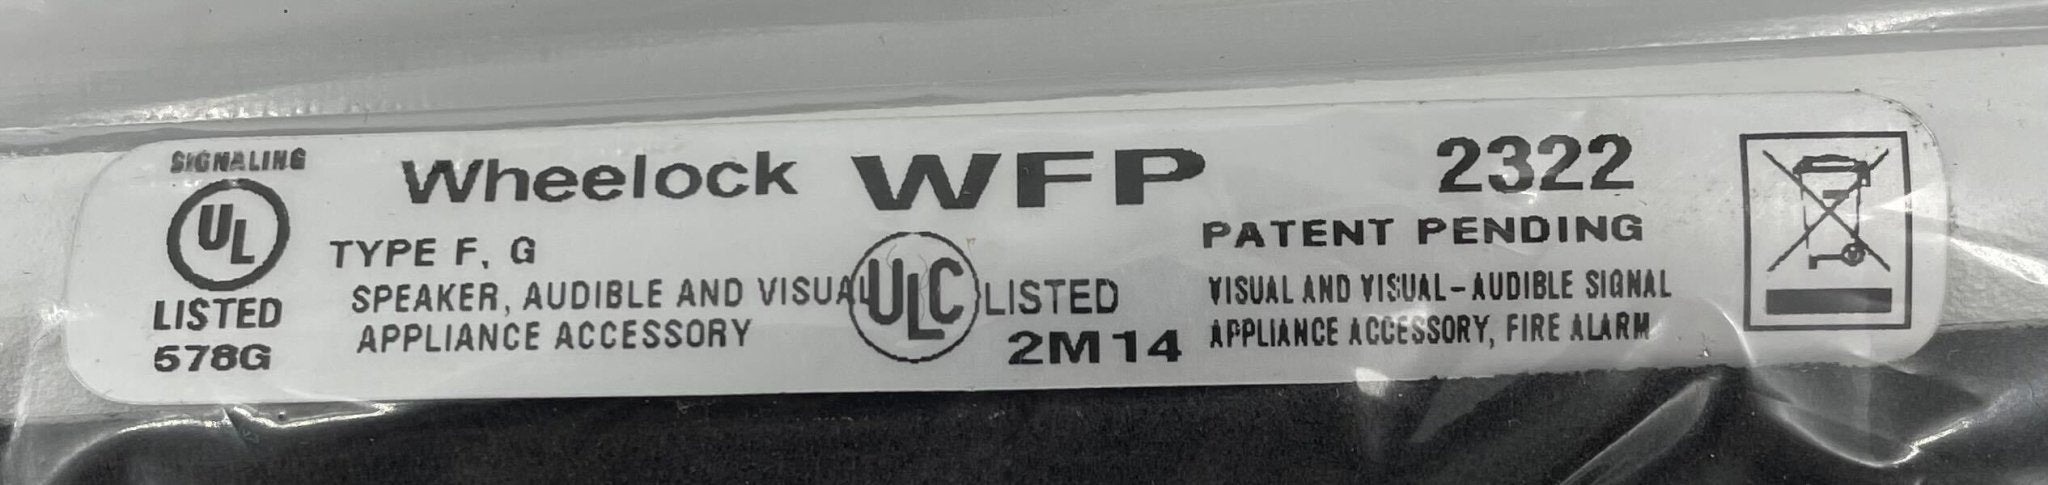 Wheelock WFP-W - The Fire Alarm Supplier